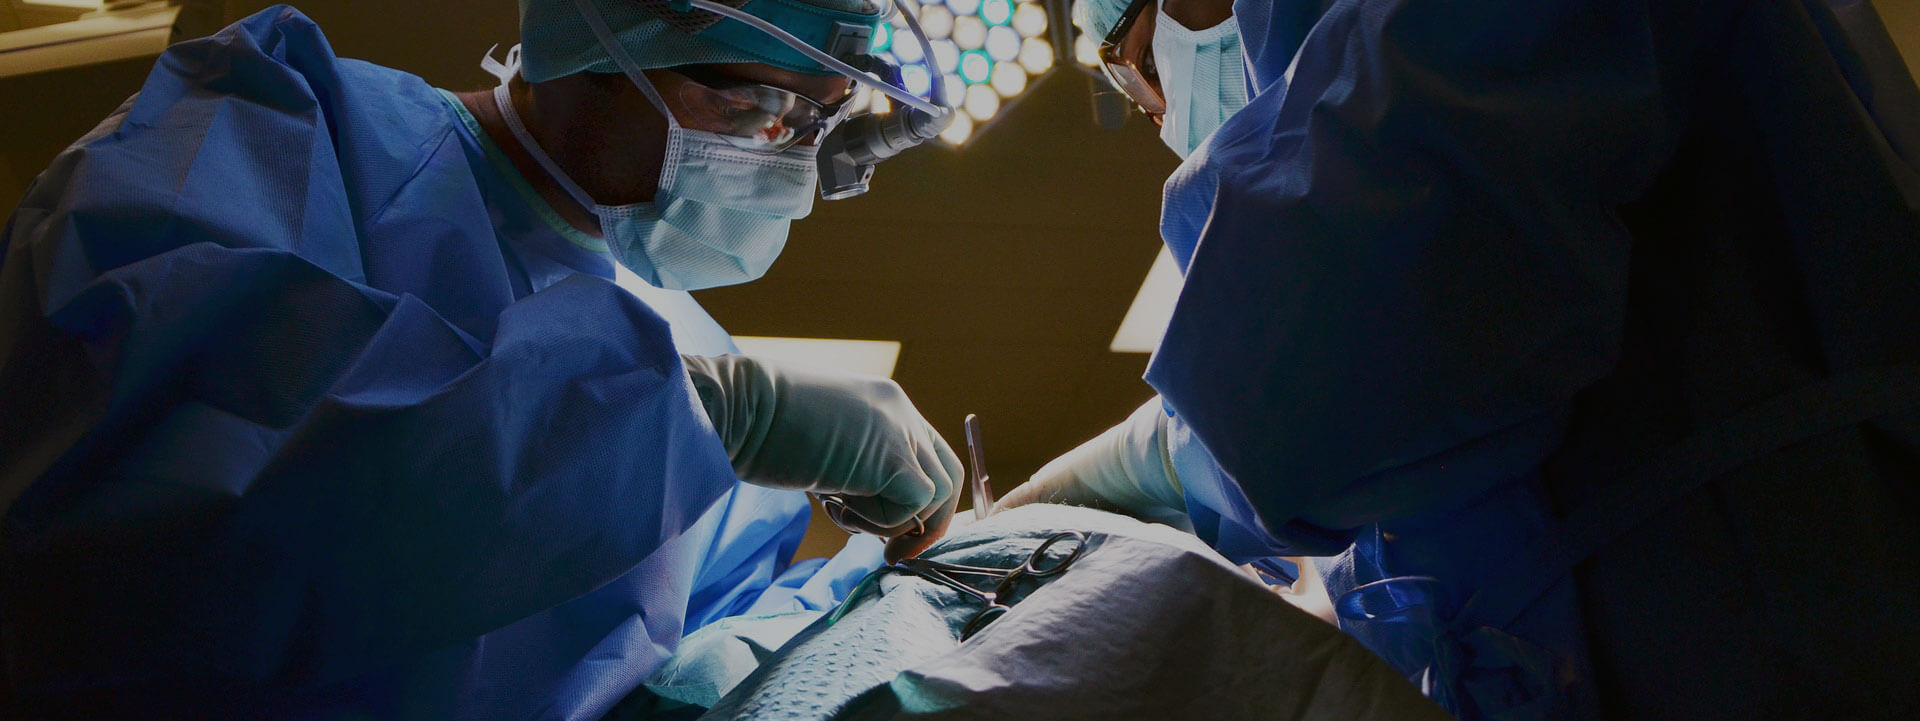 surgeons doing surgery on a patient